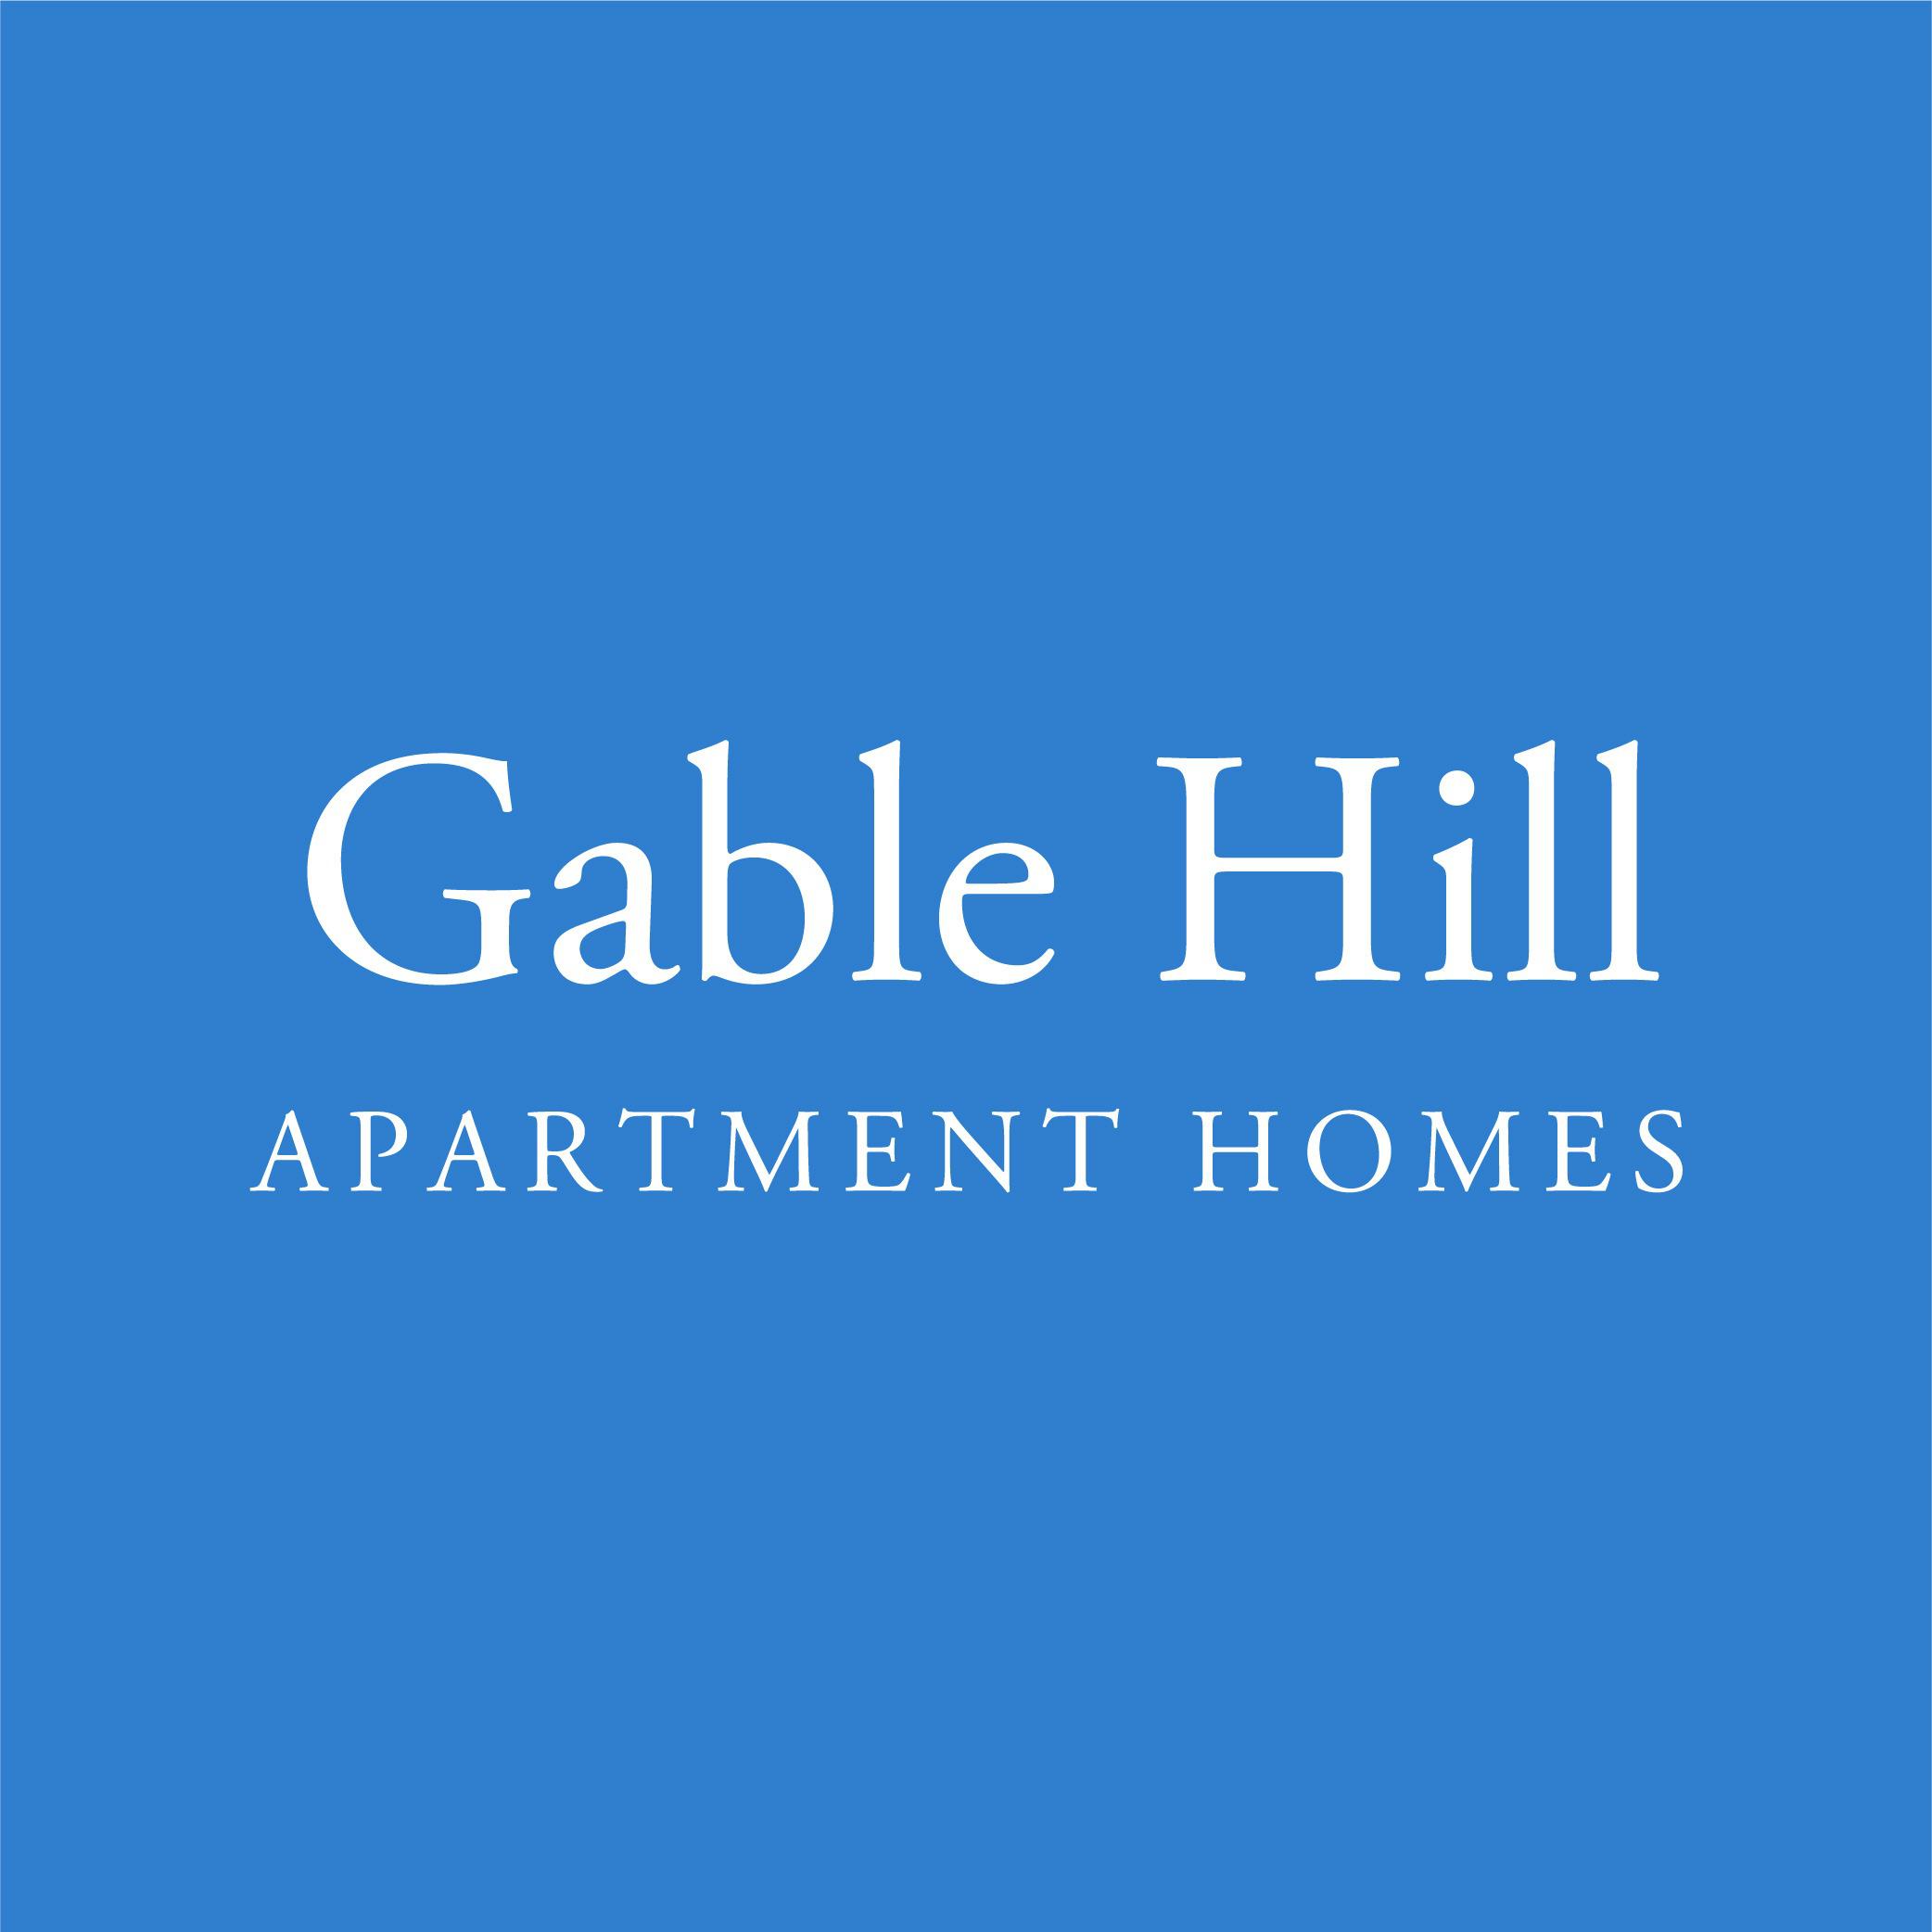 Gable Hill Apartment Homes